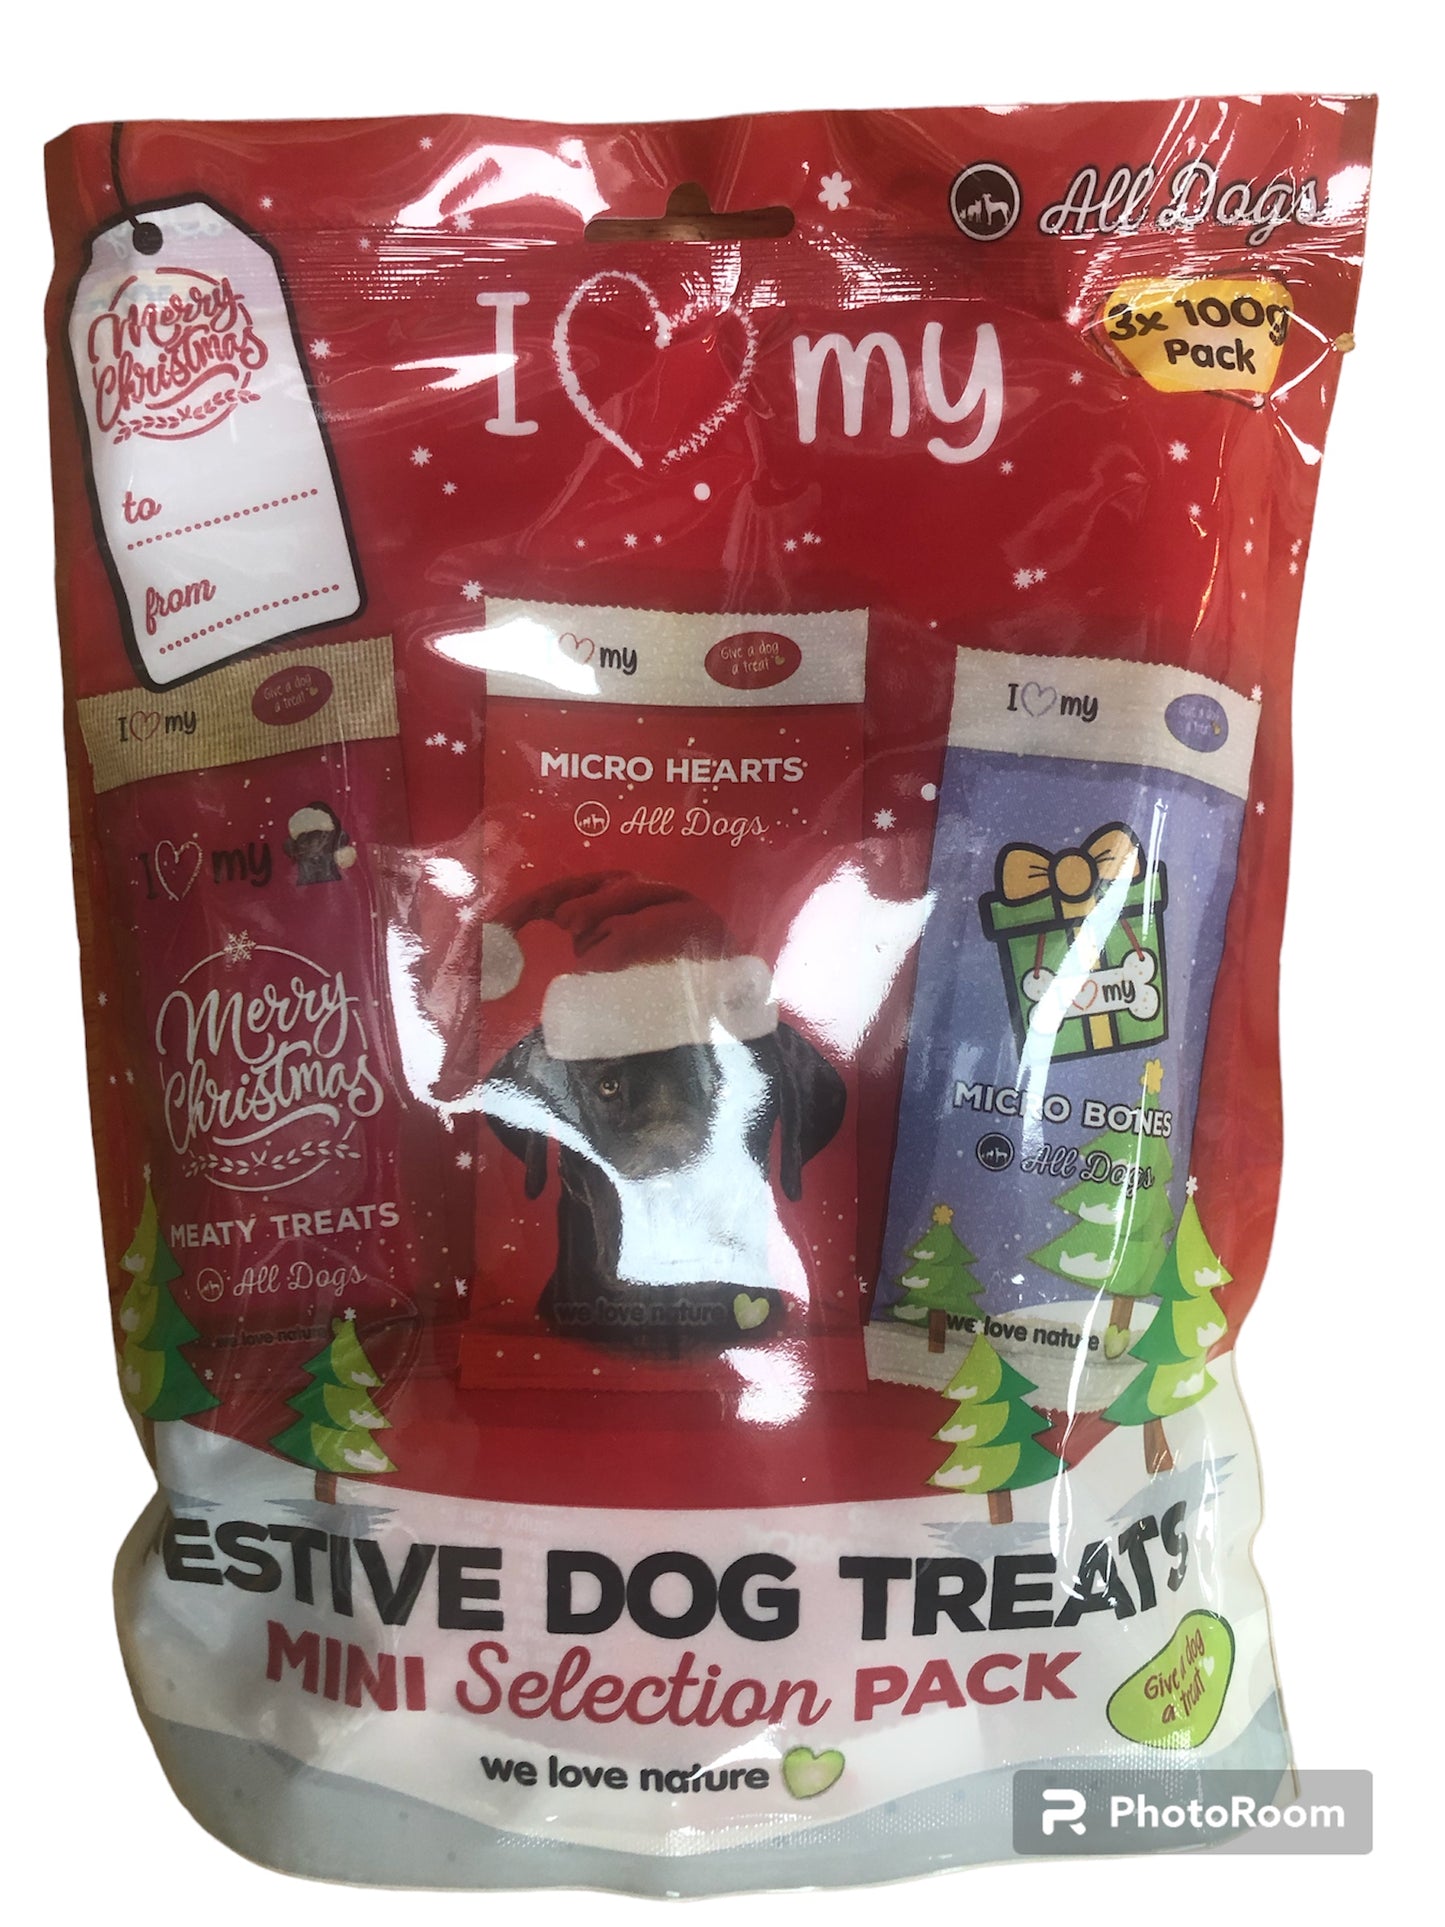 I ❤️ my festive dog treats mini selection pack 3 x 100g packs inside